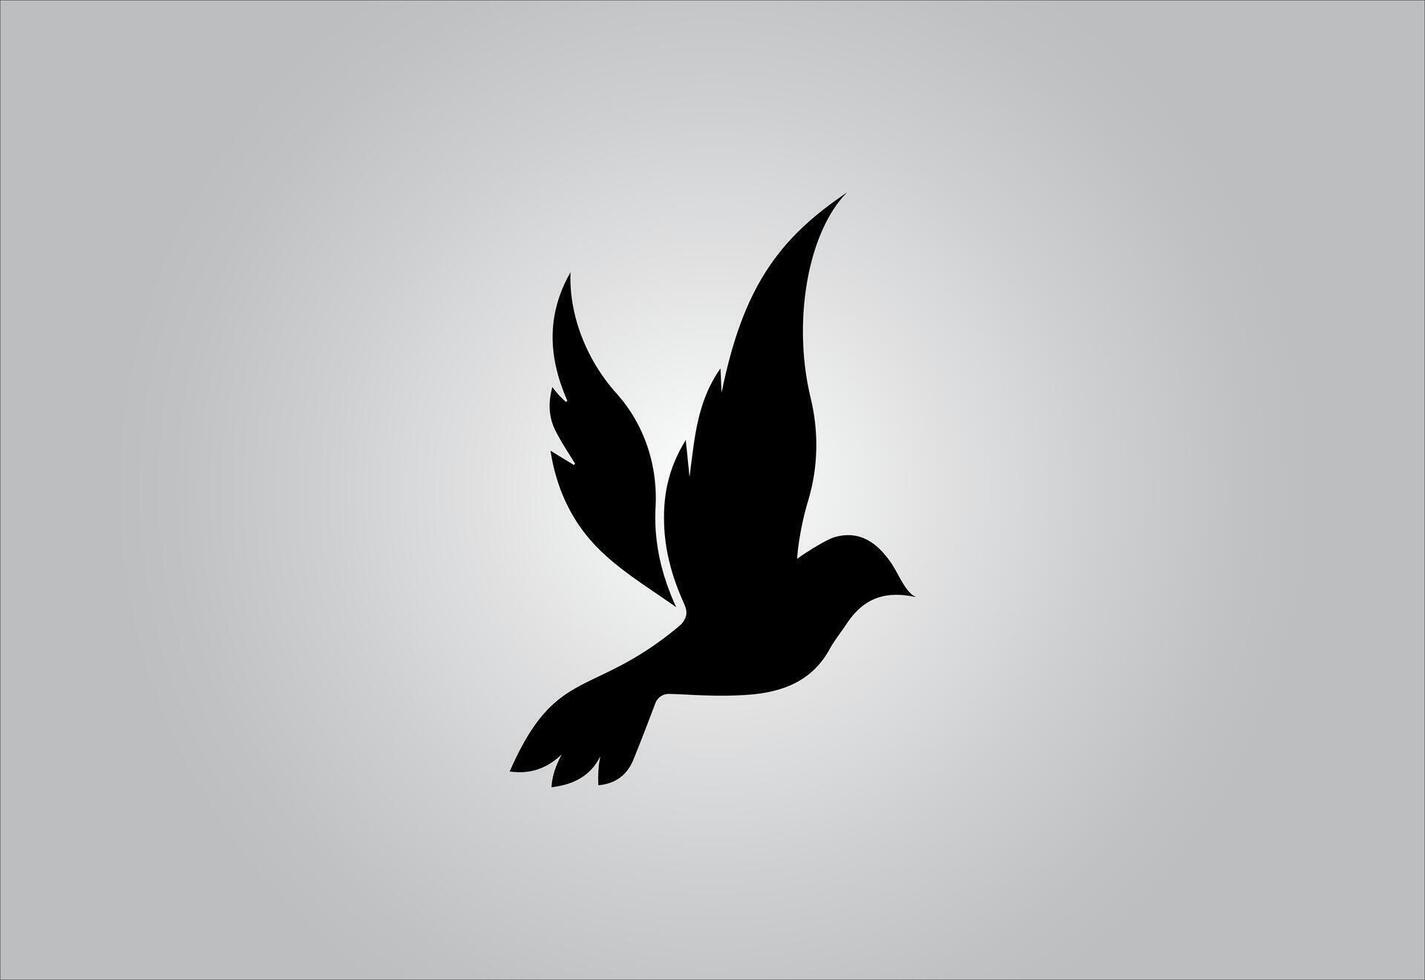 abstract bird logo design Vector illustration